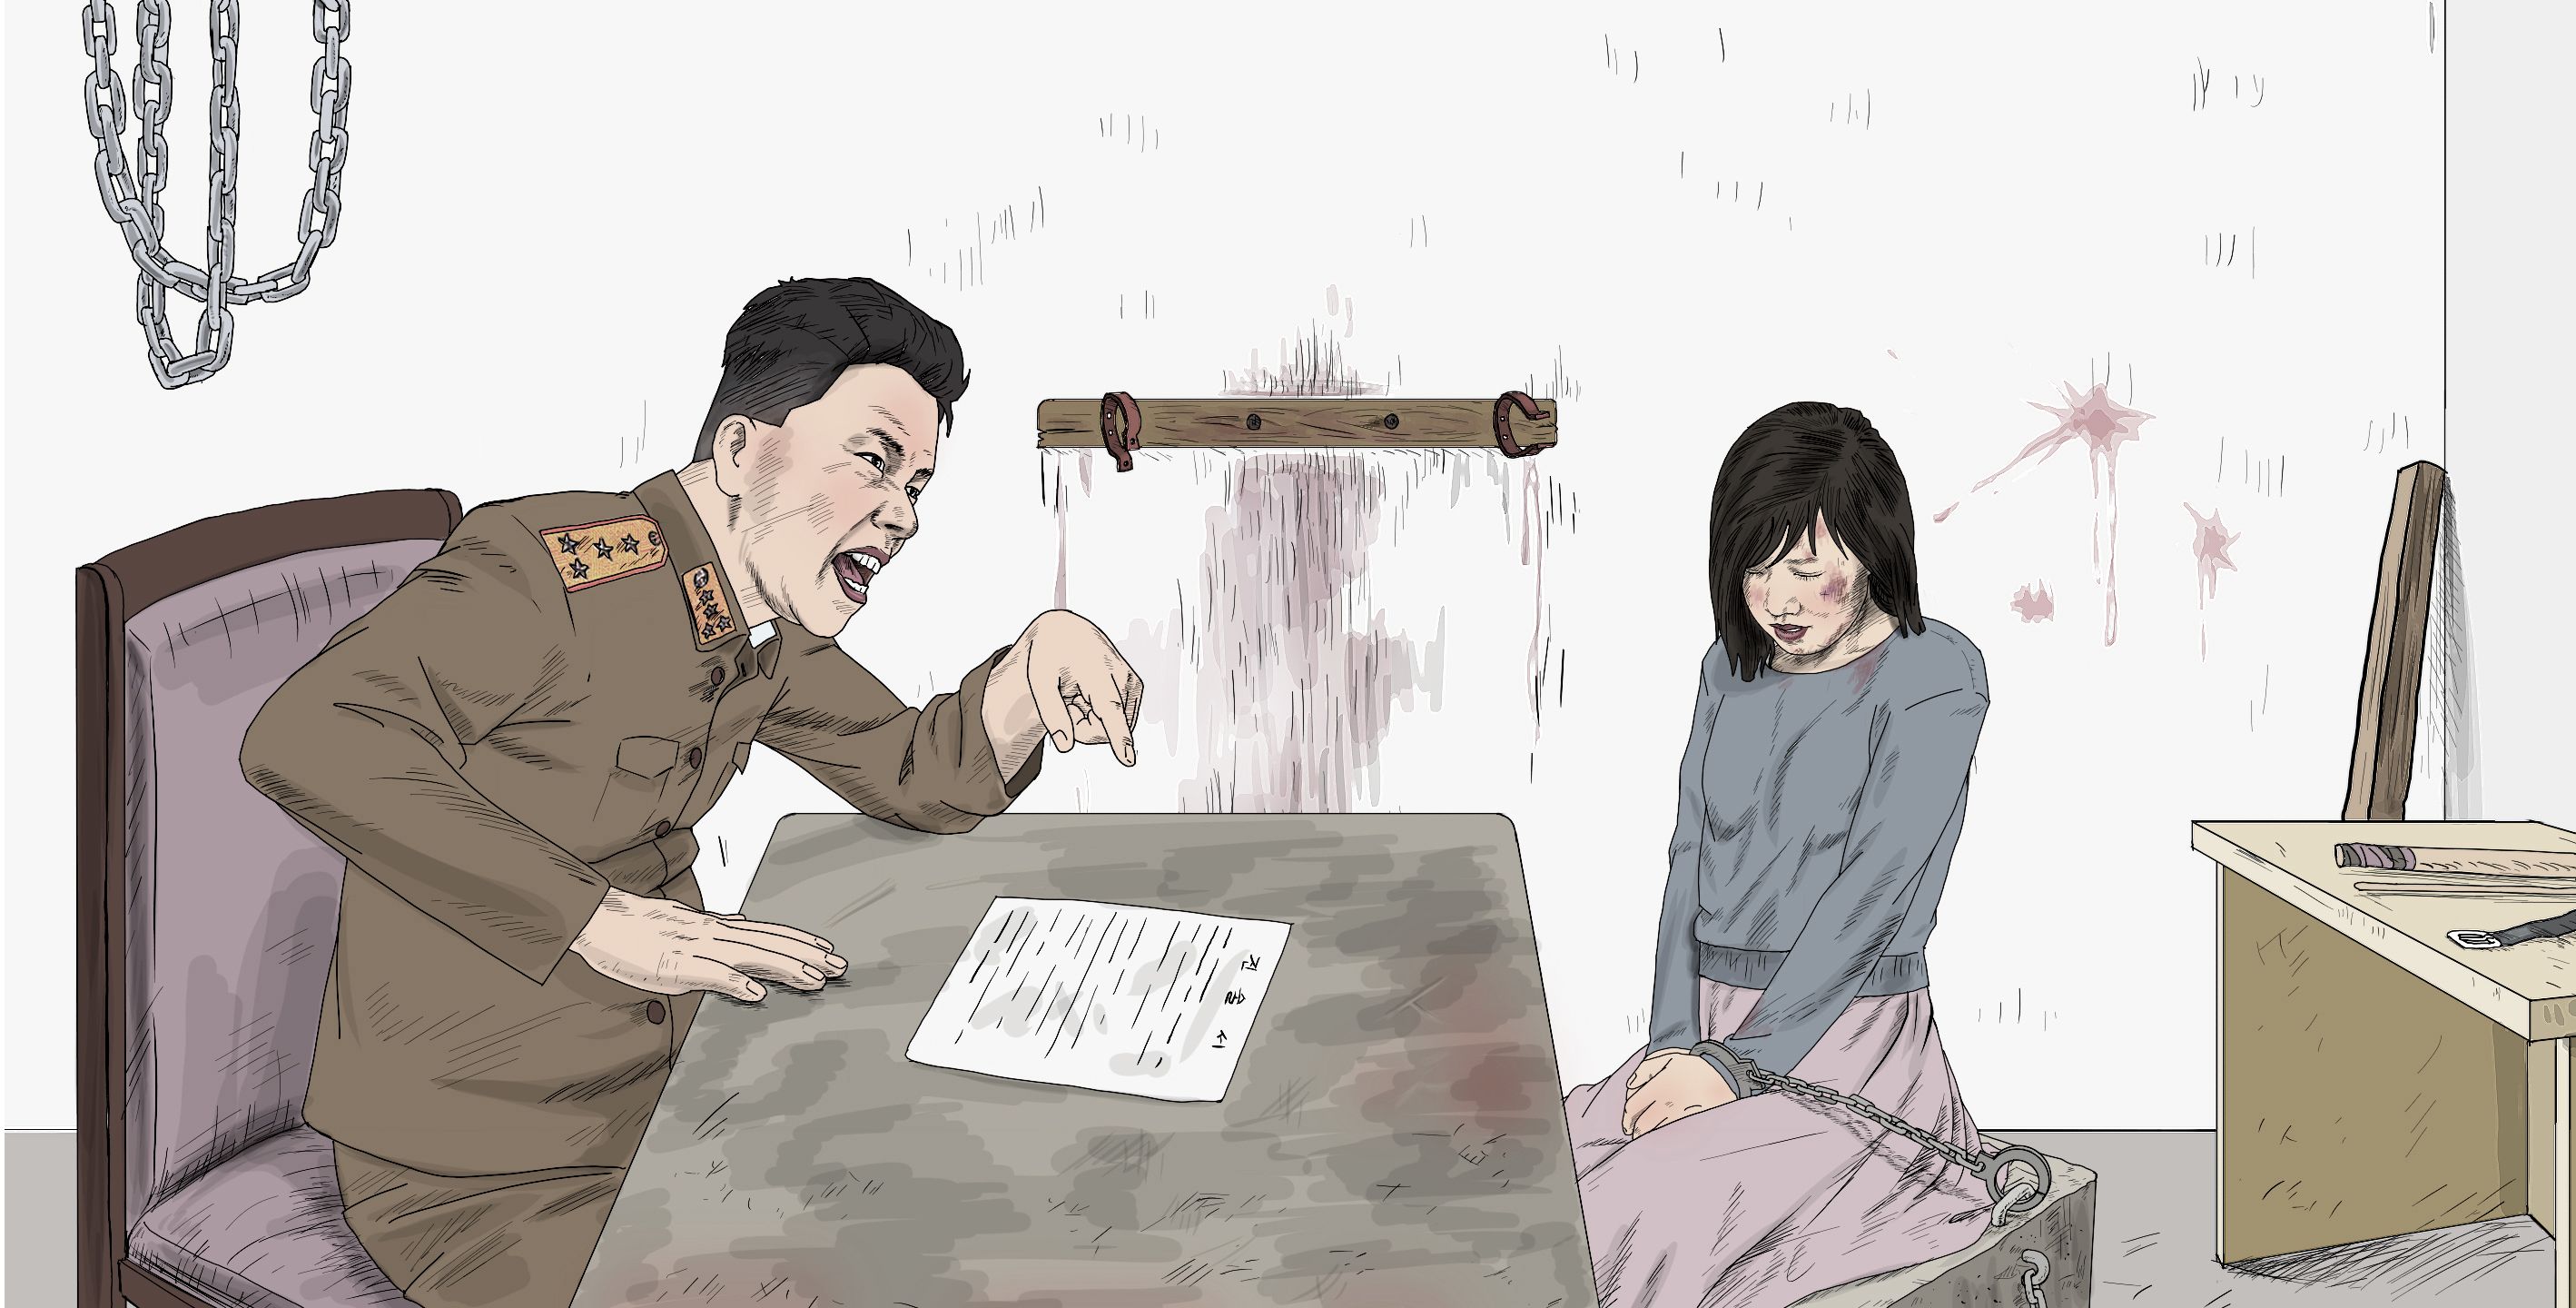 Funny Rape Xnxx - North Korea: Reports of rape and sexual abuse against women | CNN